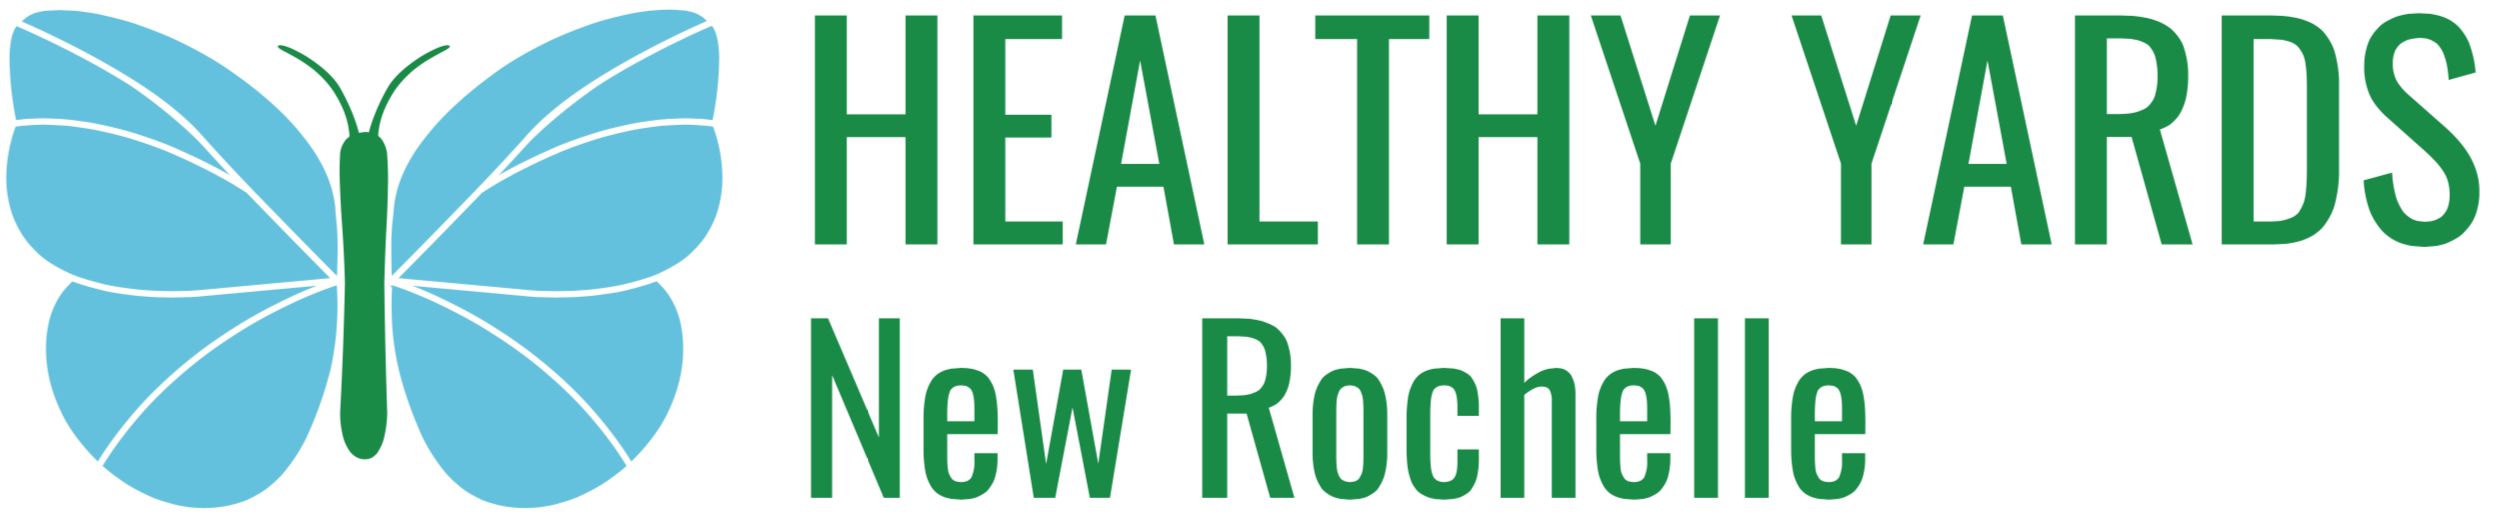 Healthy Yards New Rochelle logo